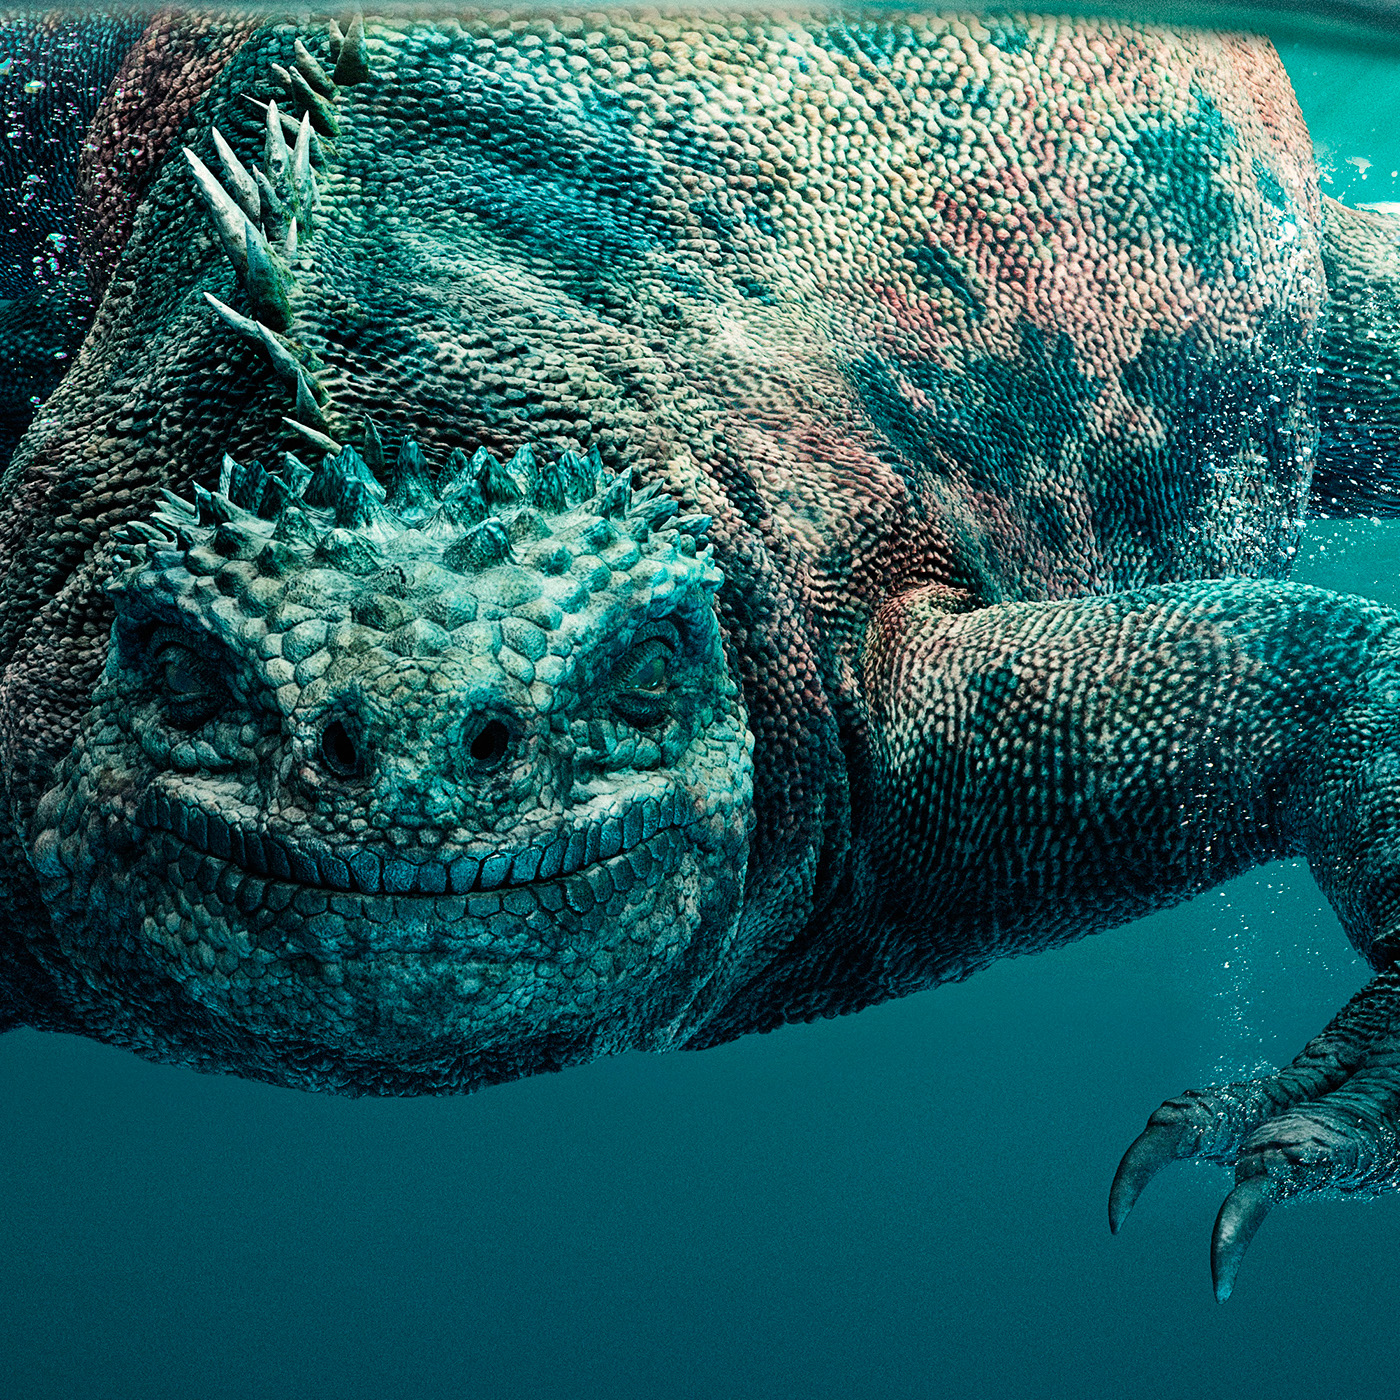 Ecuador tourism animals alligator Cayman ballena Whale Turtle tortuga iguana Galapagos sea